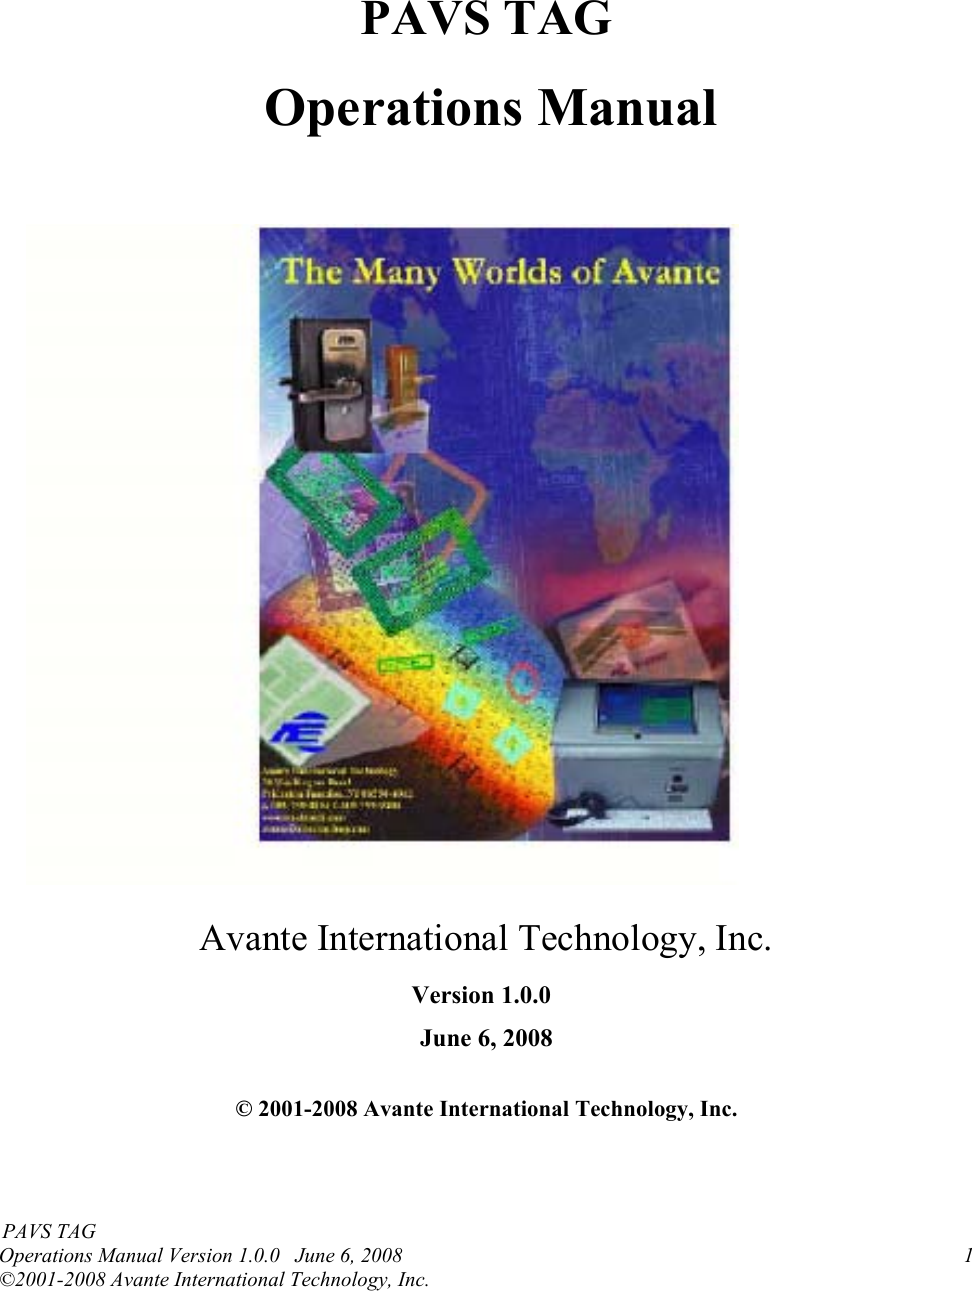   PAVS TAG    Operations Manual              Avante International Technology, Inc.        Version 1.0.0 June 6, 2008  © 2001-2008 Avante International Technology, Inc. PAVS TAG  Operations Manual Version 1.0.0   June 6, 2008       1 ©2001-2008 Avante International Technology, Inc.  